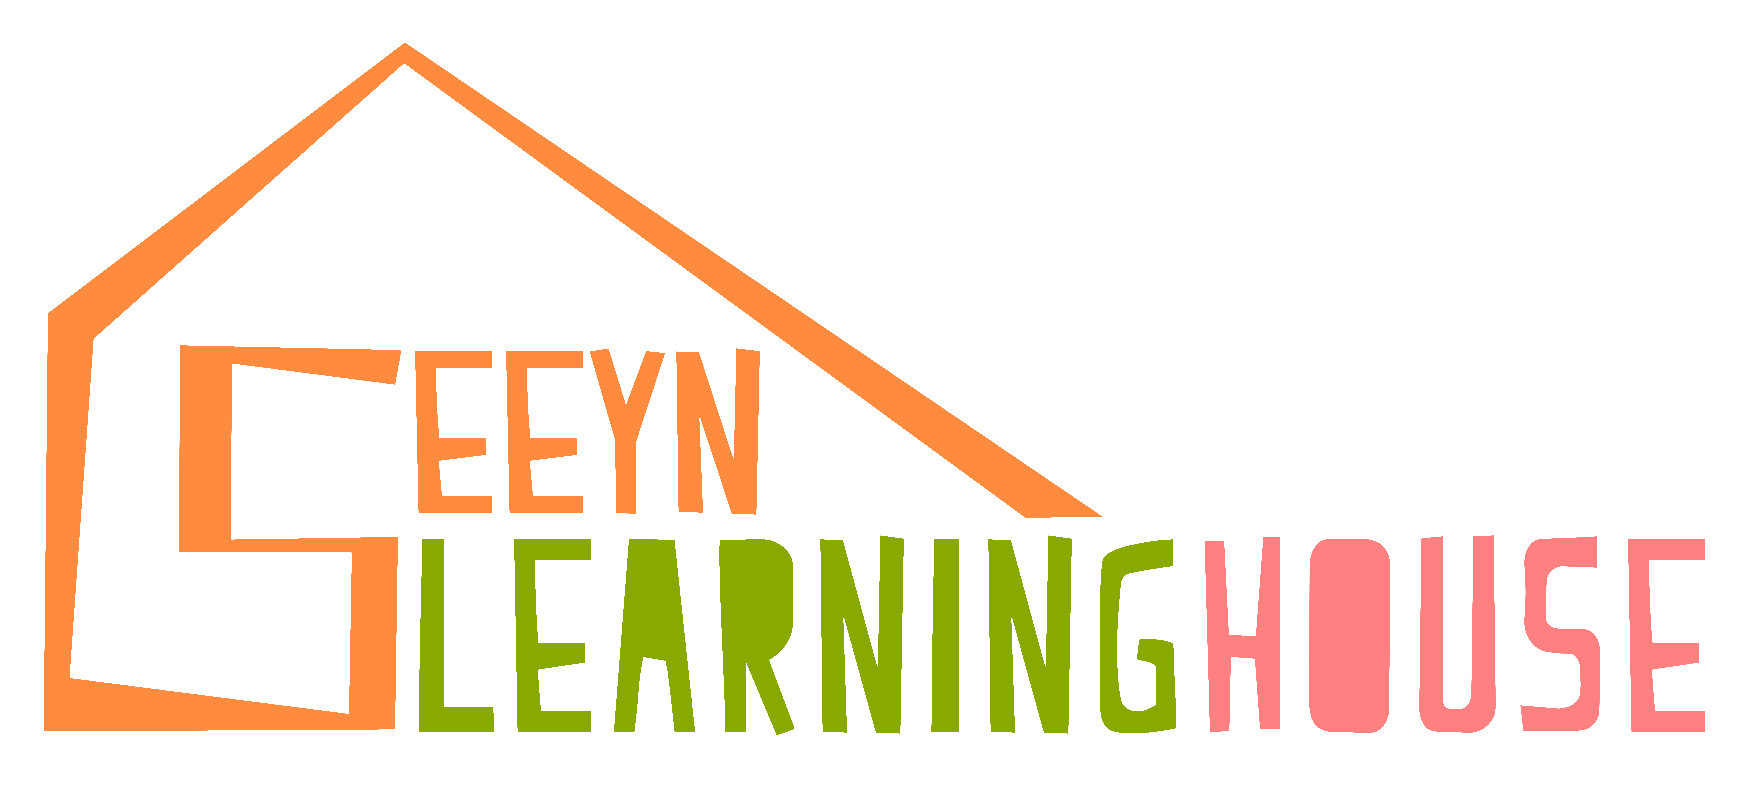 SEEYN Learning House